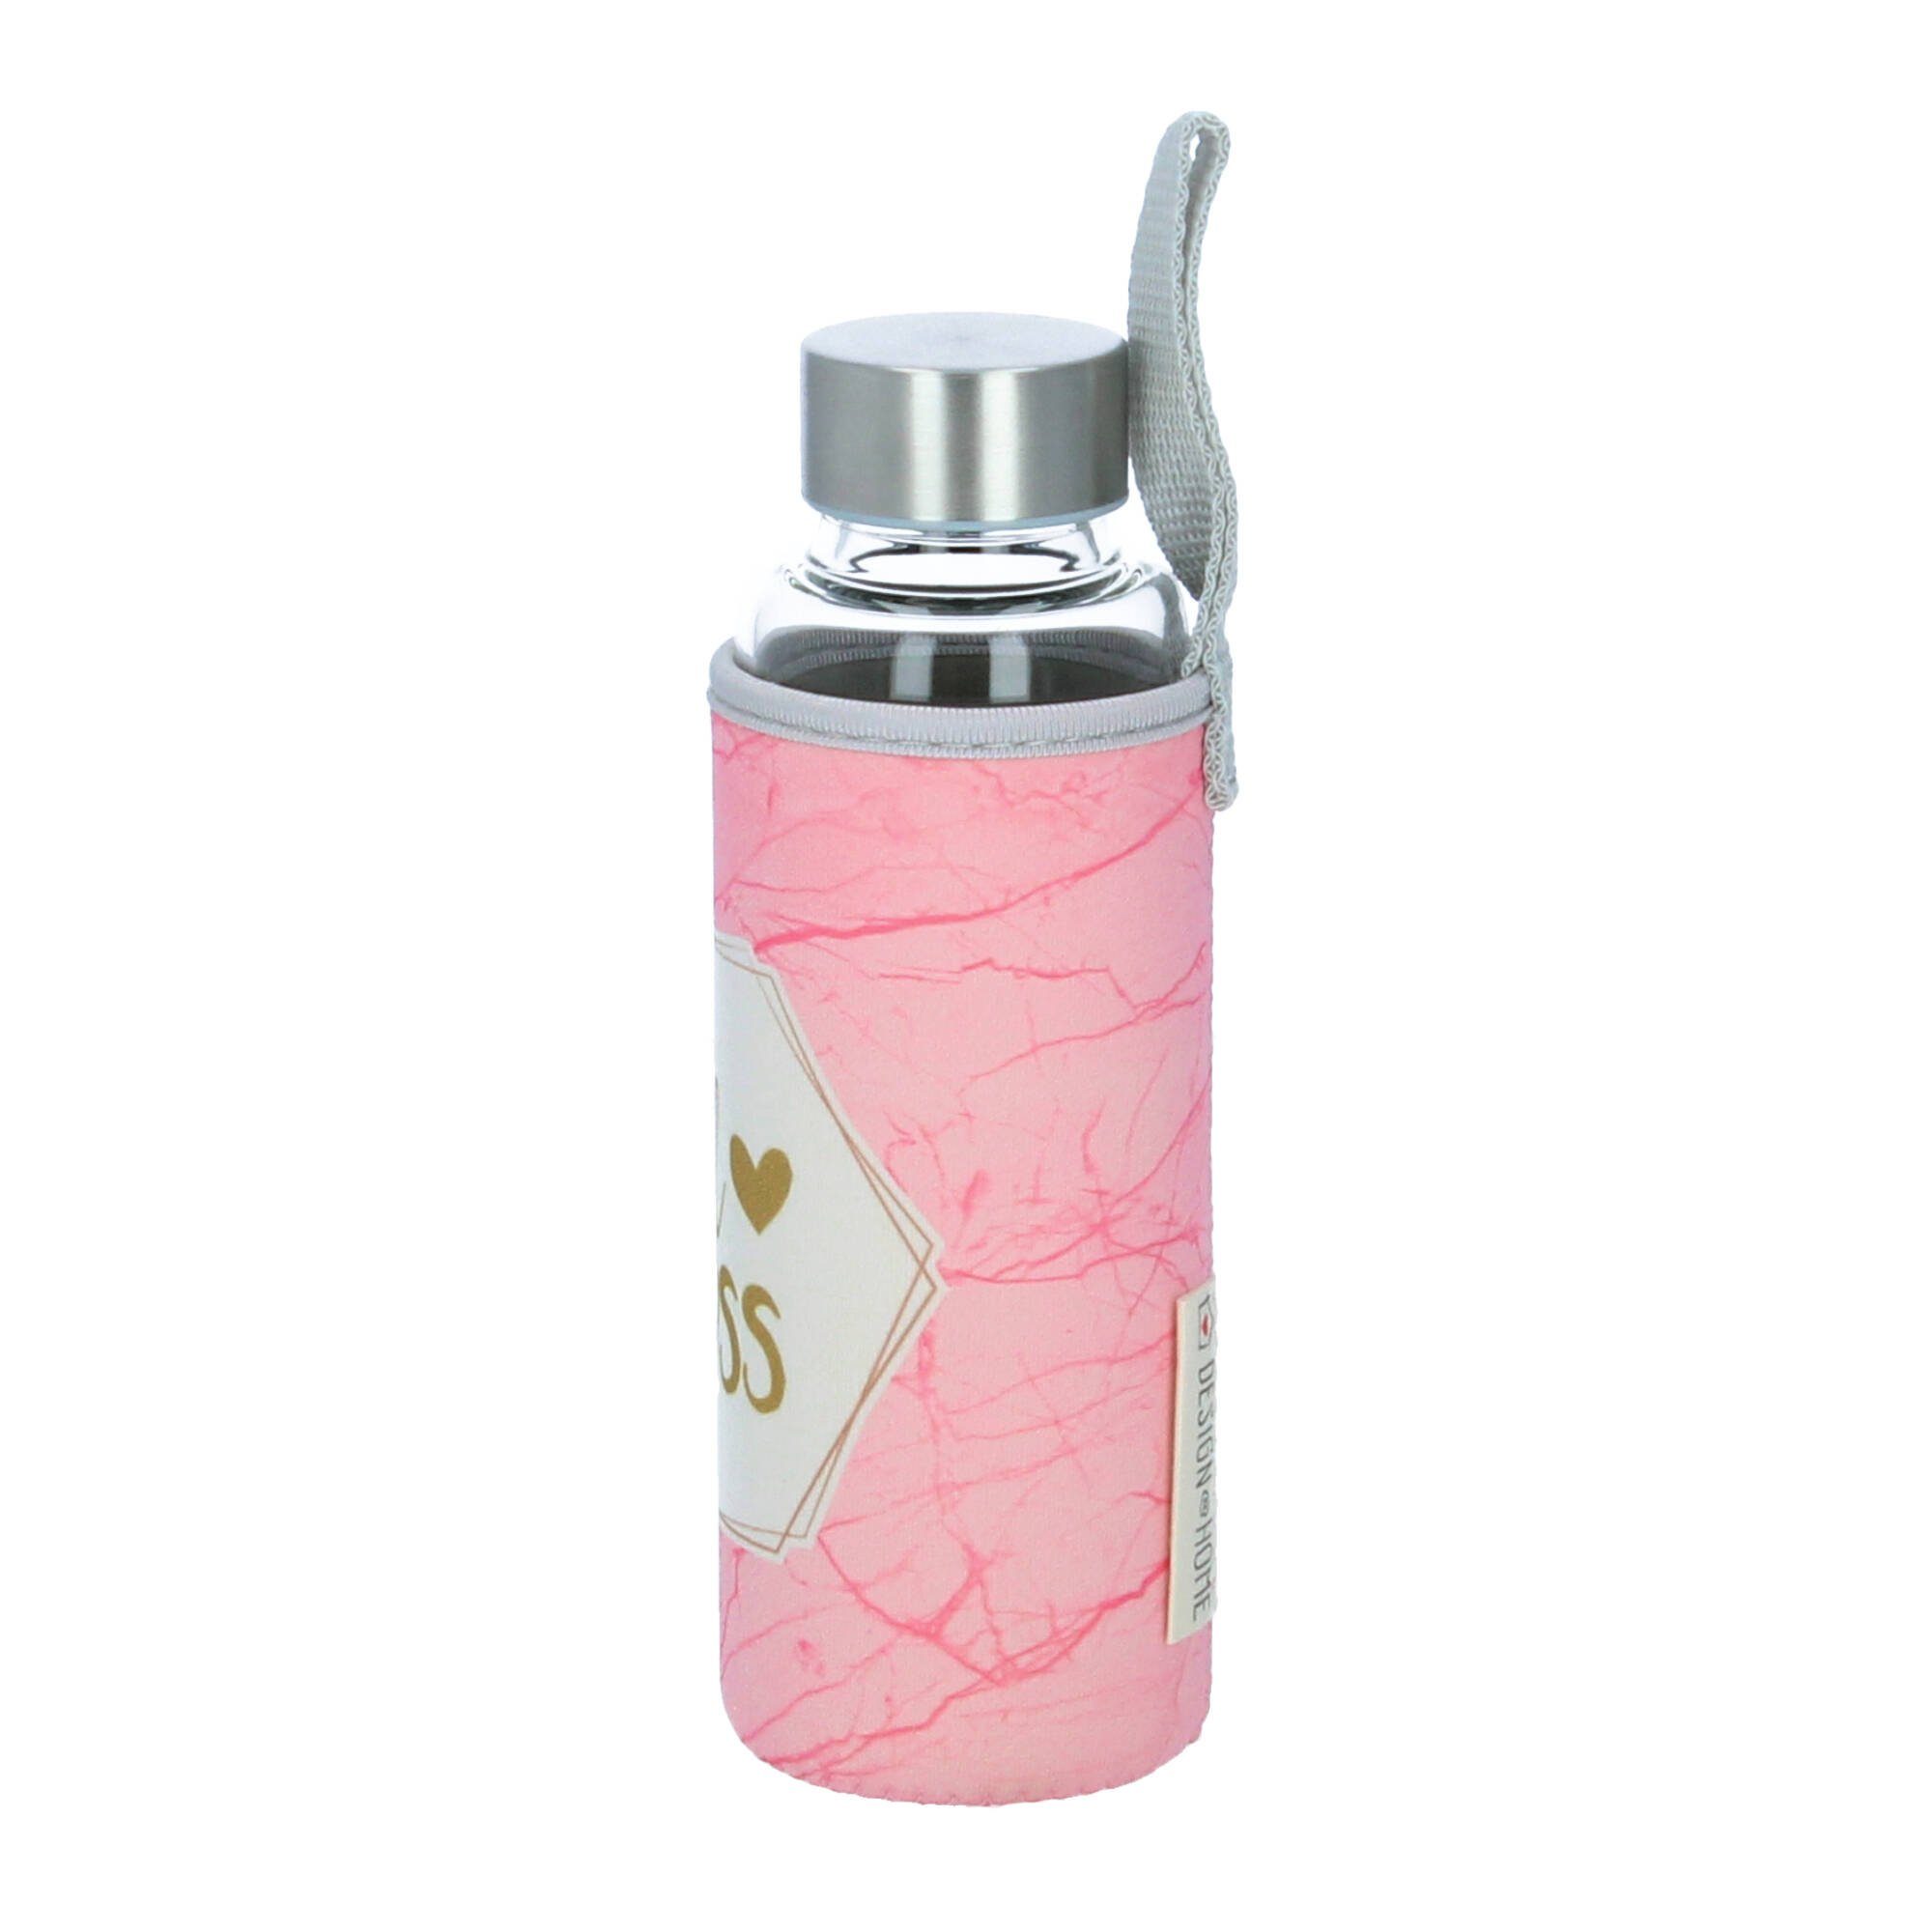 PPD mit rosa Schutzhülle Glasflasche Trinkflasche girlboss ml 350